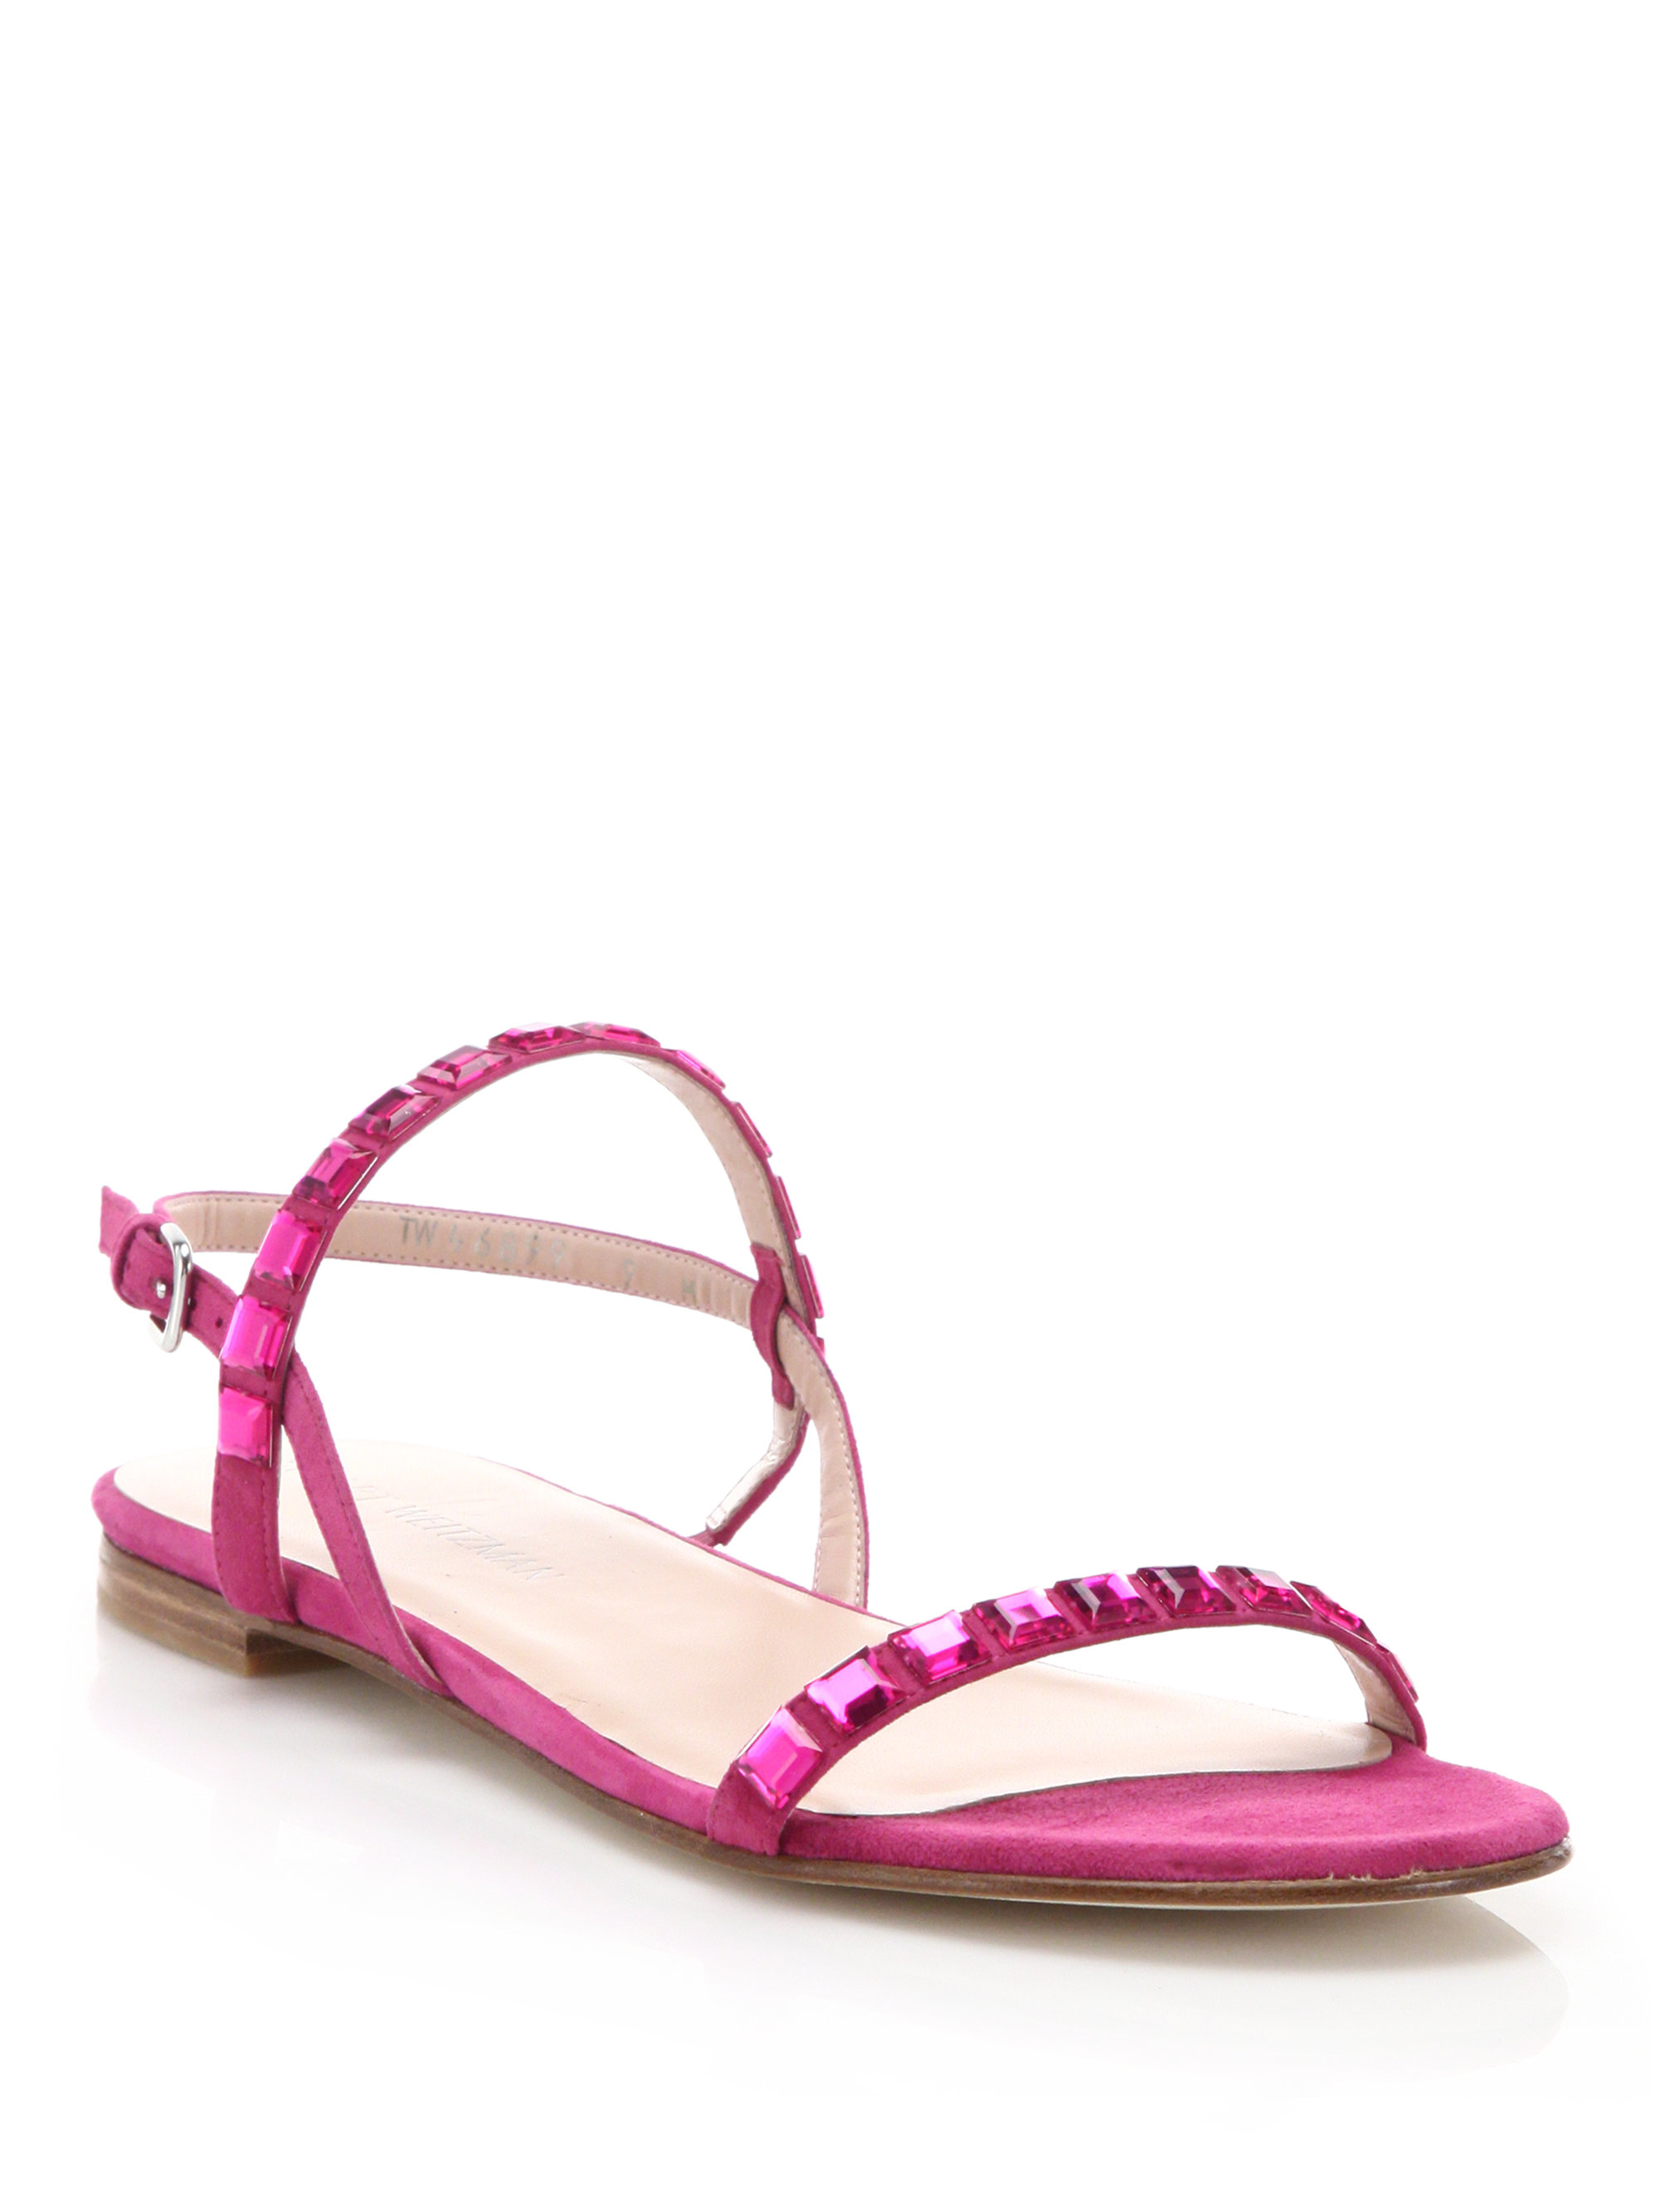 Stuart Weitzman Trailmix Jeweled Suede Flat Sandals in Pink - Lyst